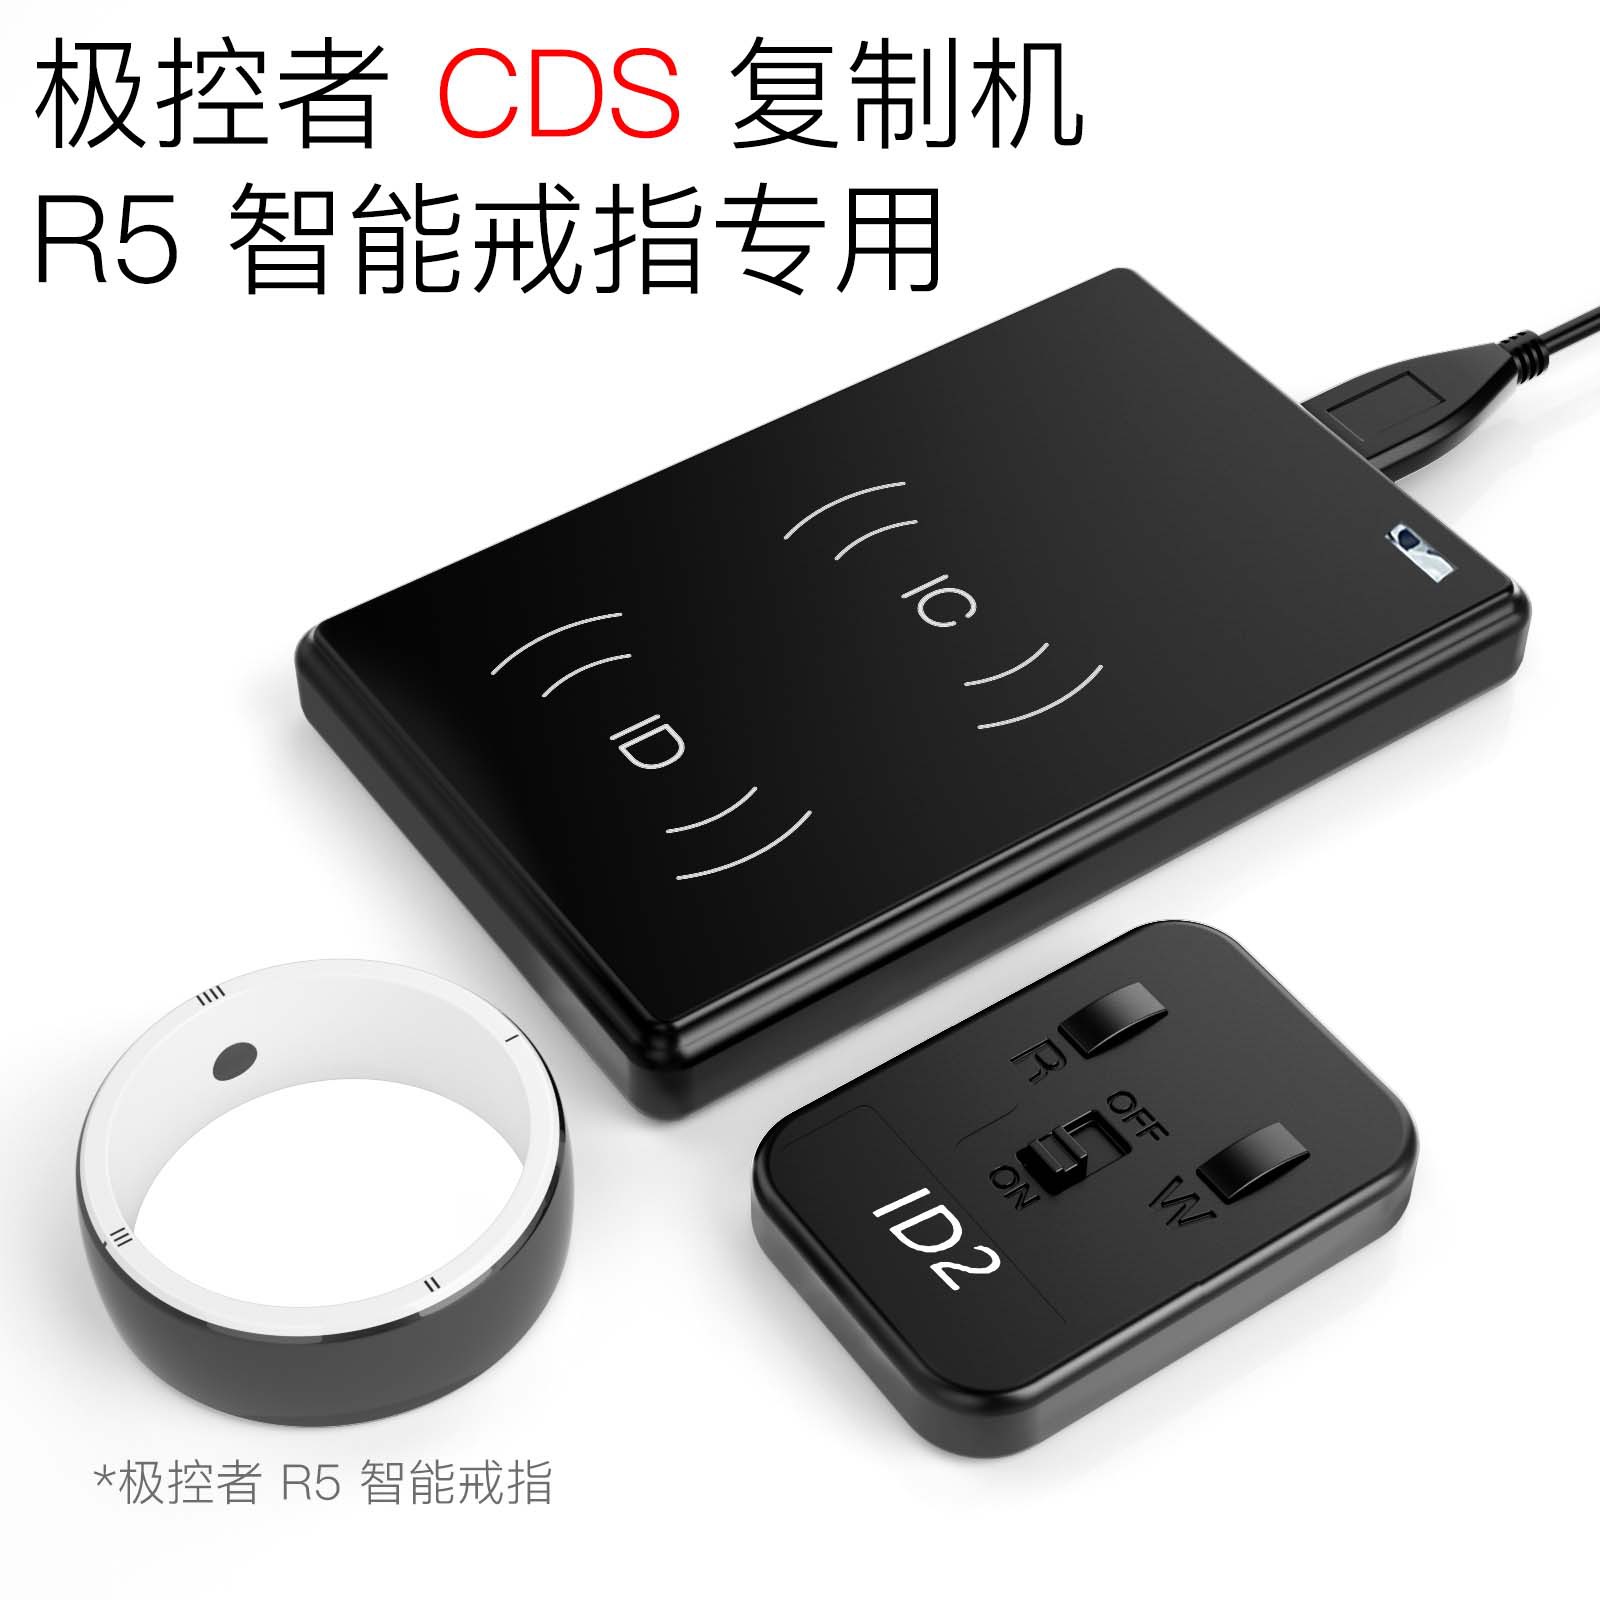 CDS感应卡复制机 R5智能戒指专用支持高低频ICIDNFC卡 极控者